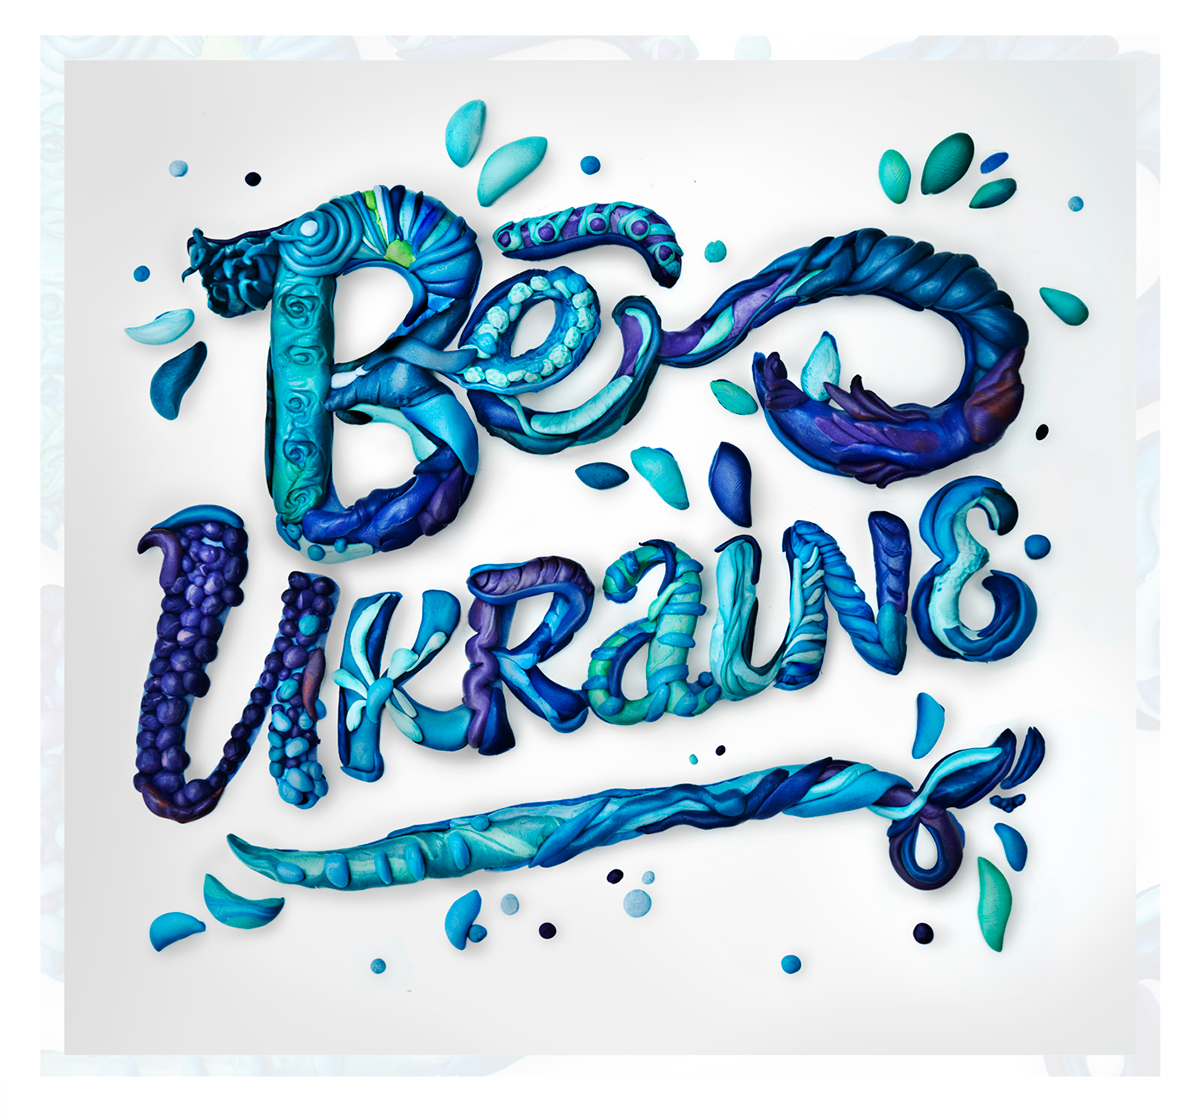 behance reviews Kyiv modelling clay Plasticine ukraine